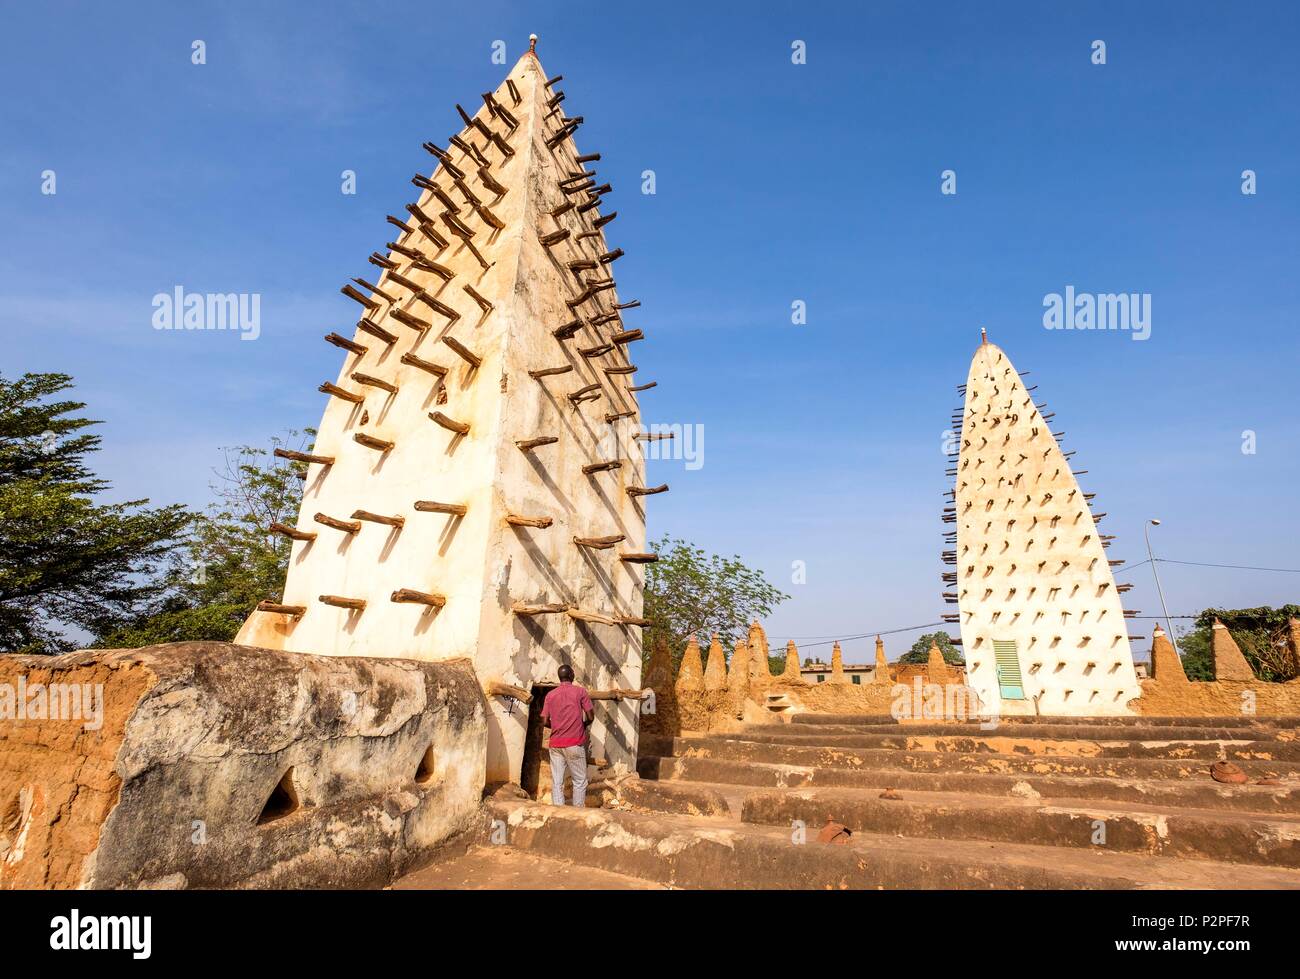 Le Burkina Faso, région Hauts-Bassins, Bobo-Dioulasso, mosquée Dioulassoba Banque D'Images